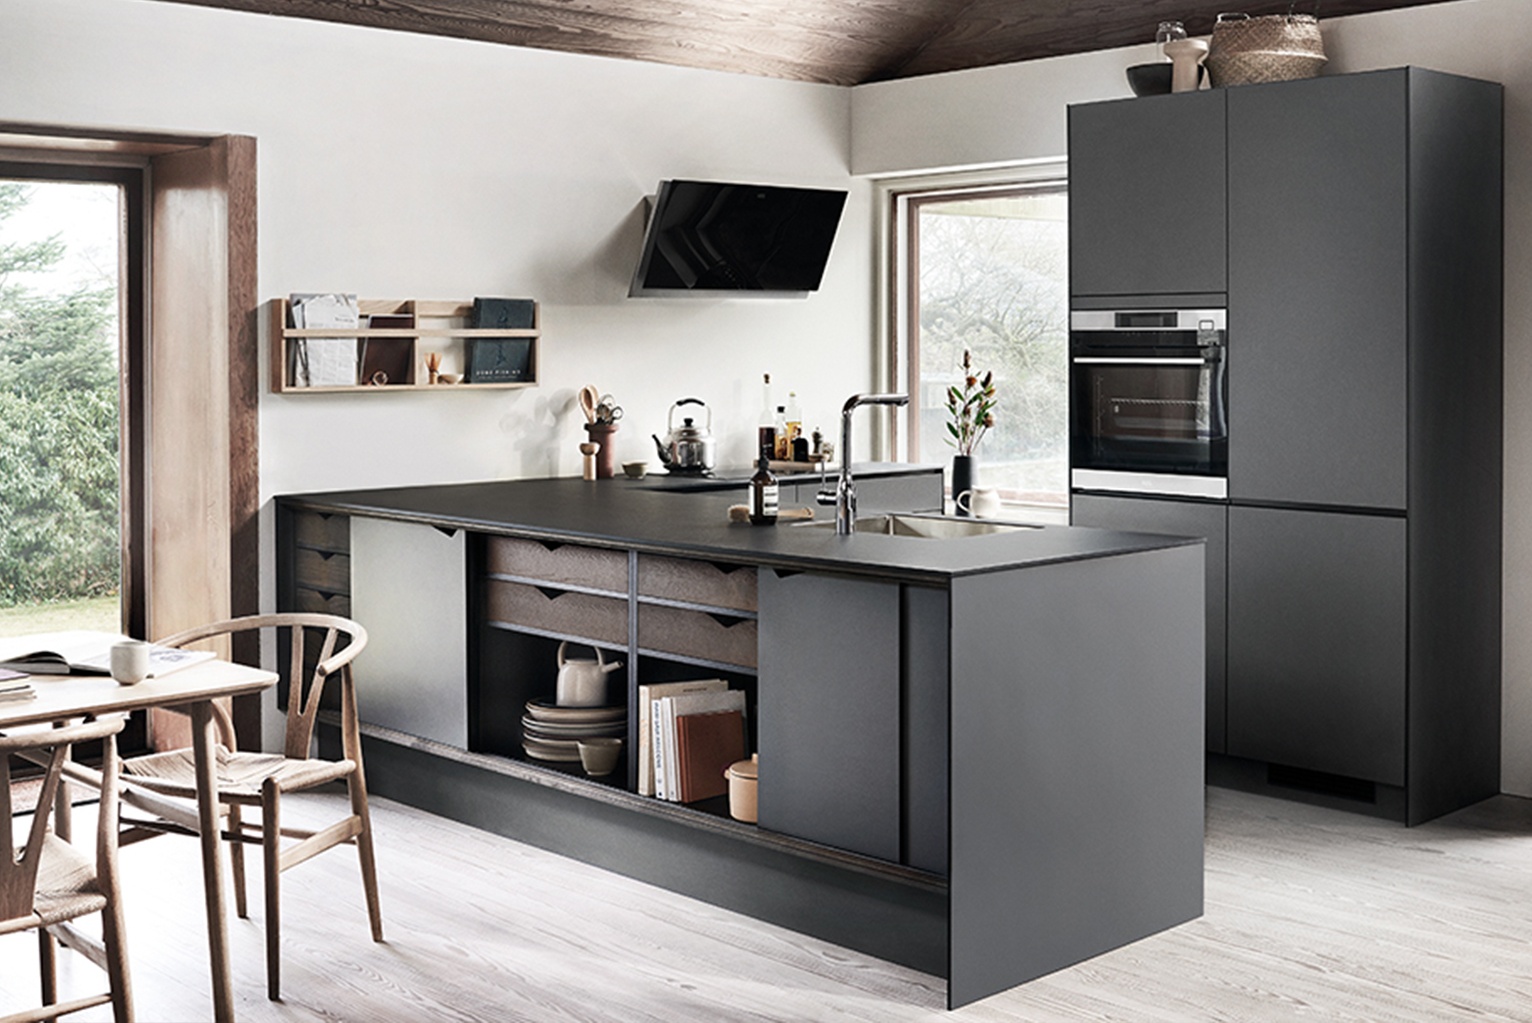 Kvik Prato X Gray kitchen collection 2.jpg